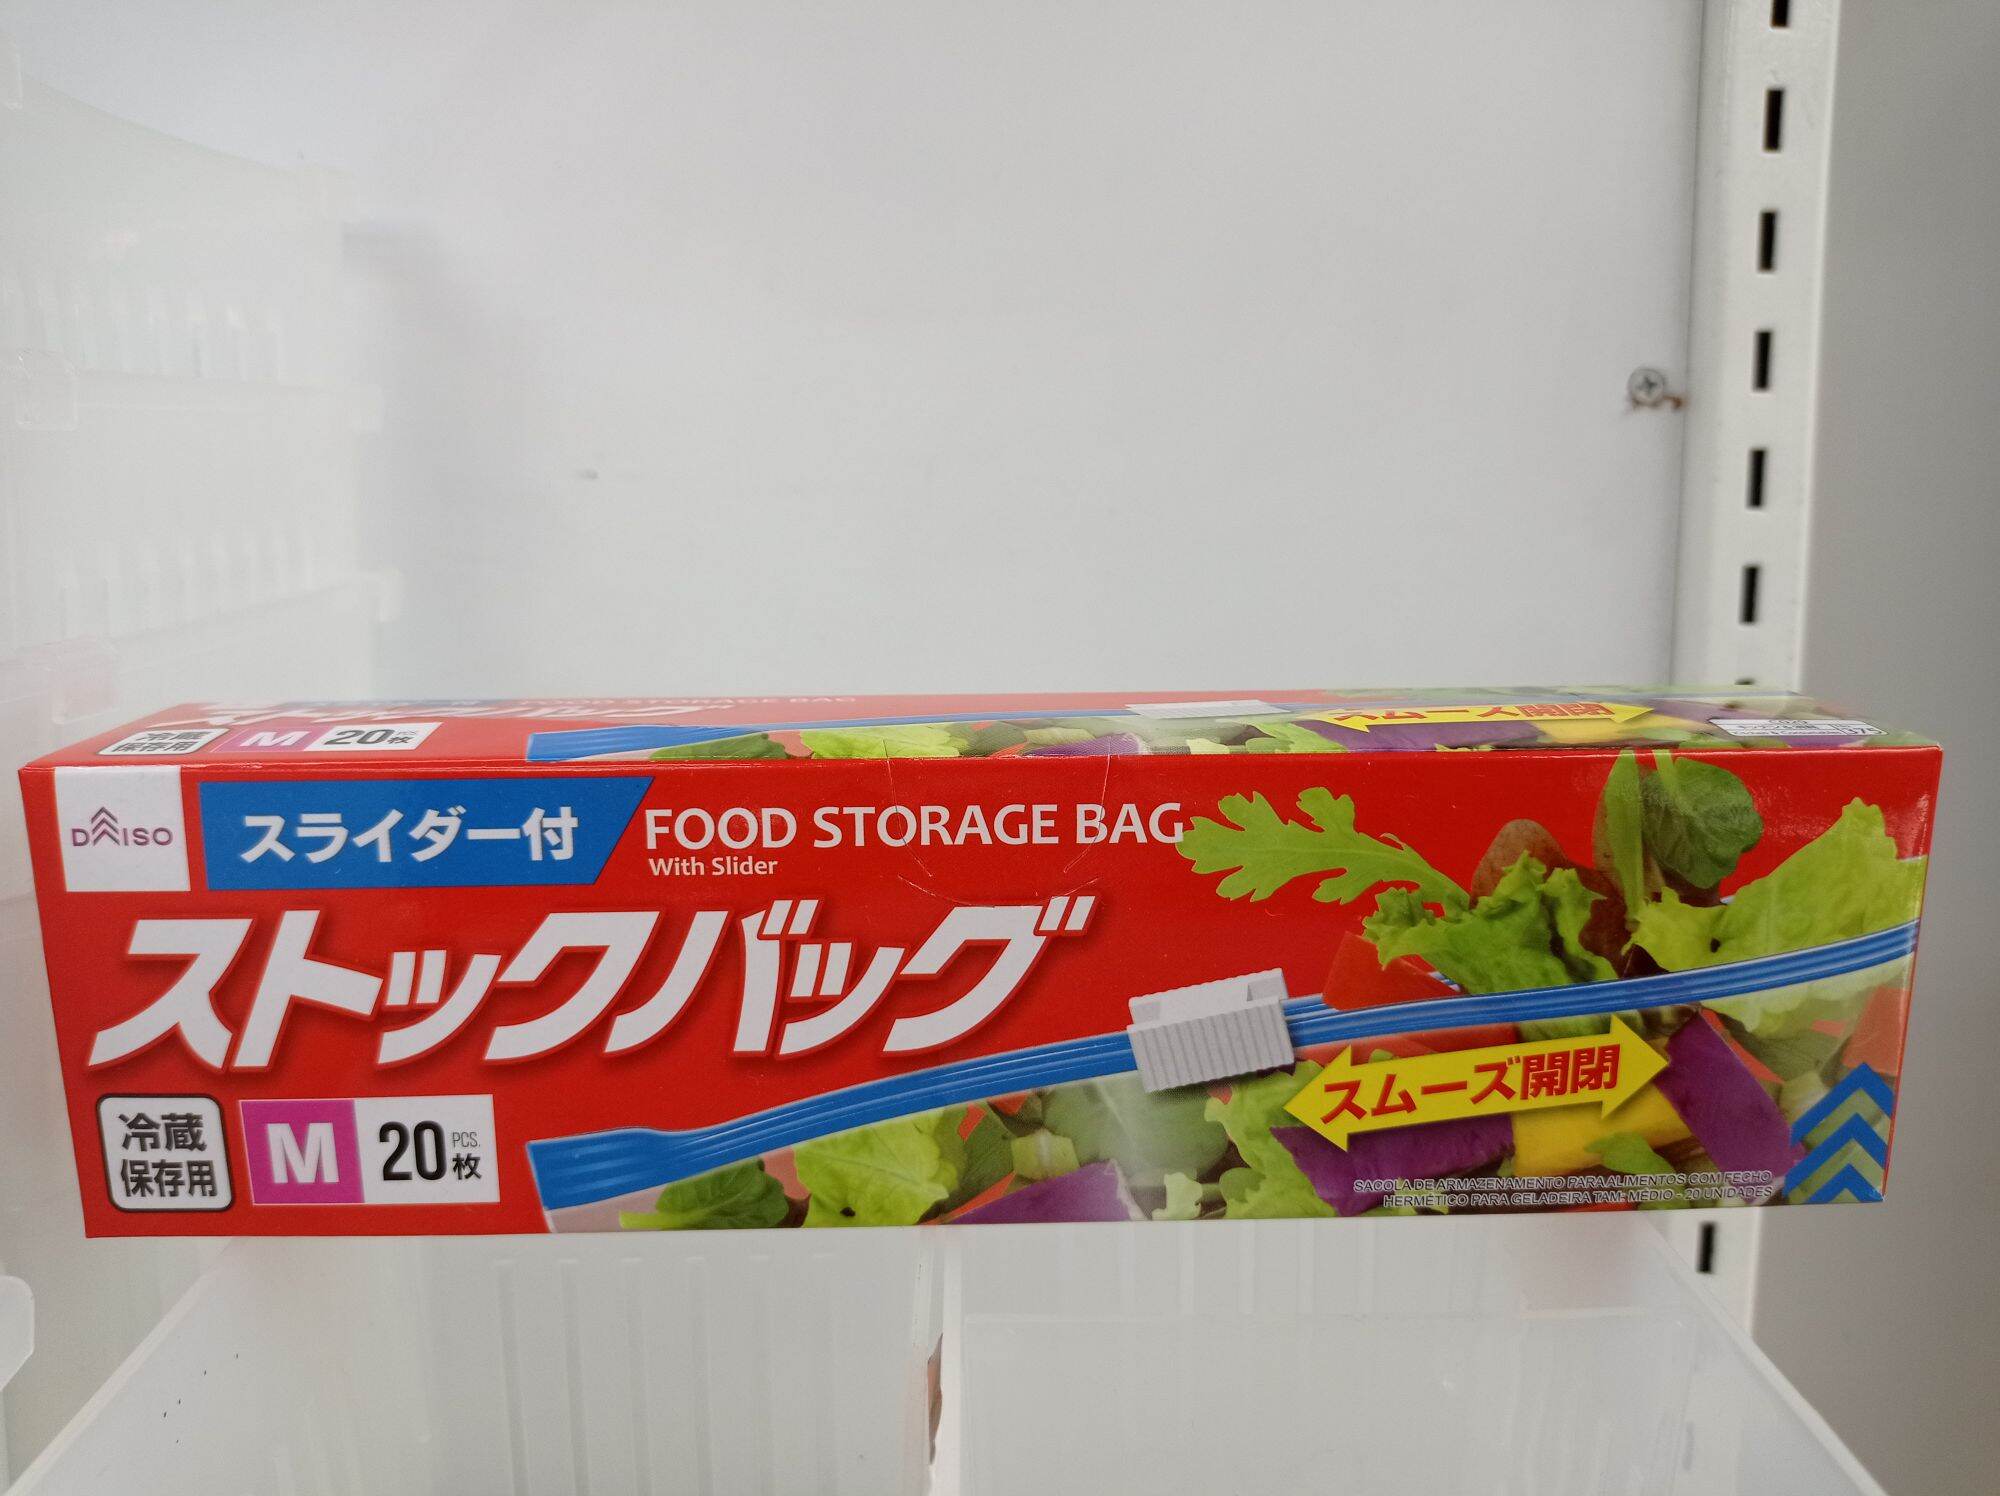 Daiso Food Storage Bags